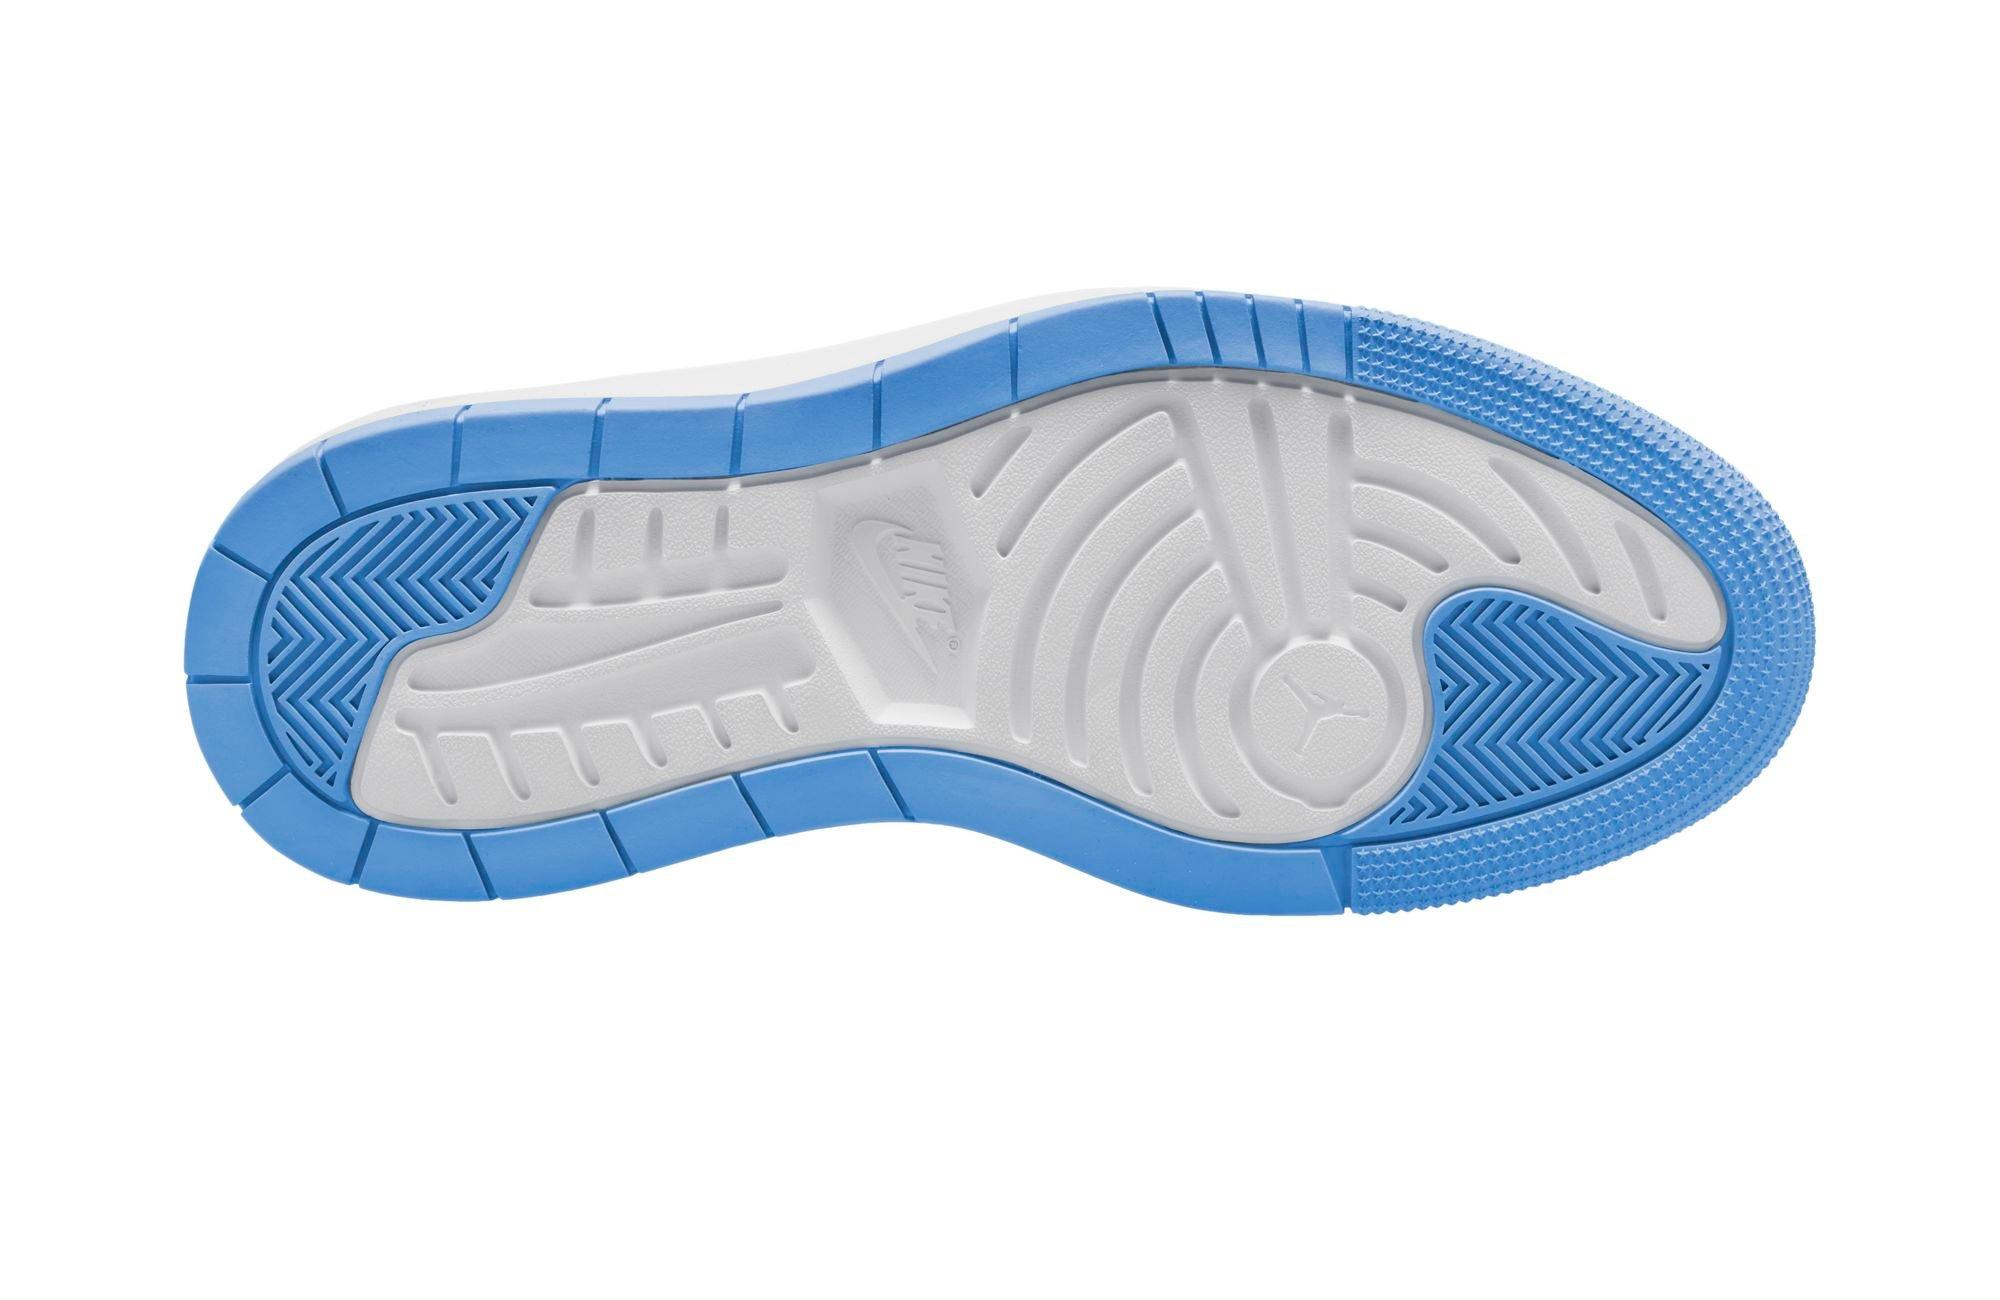 Cool, Refreshing Style: Jordan 1 Low Light Blue Sneakers